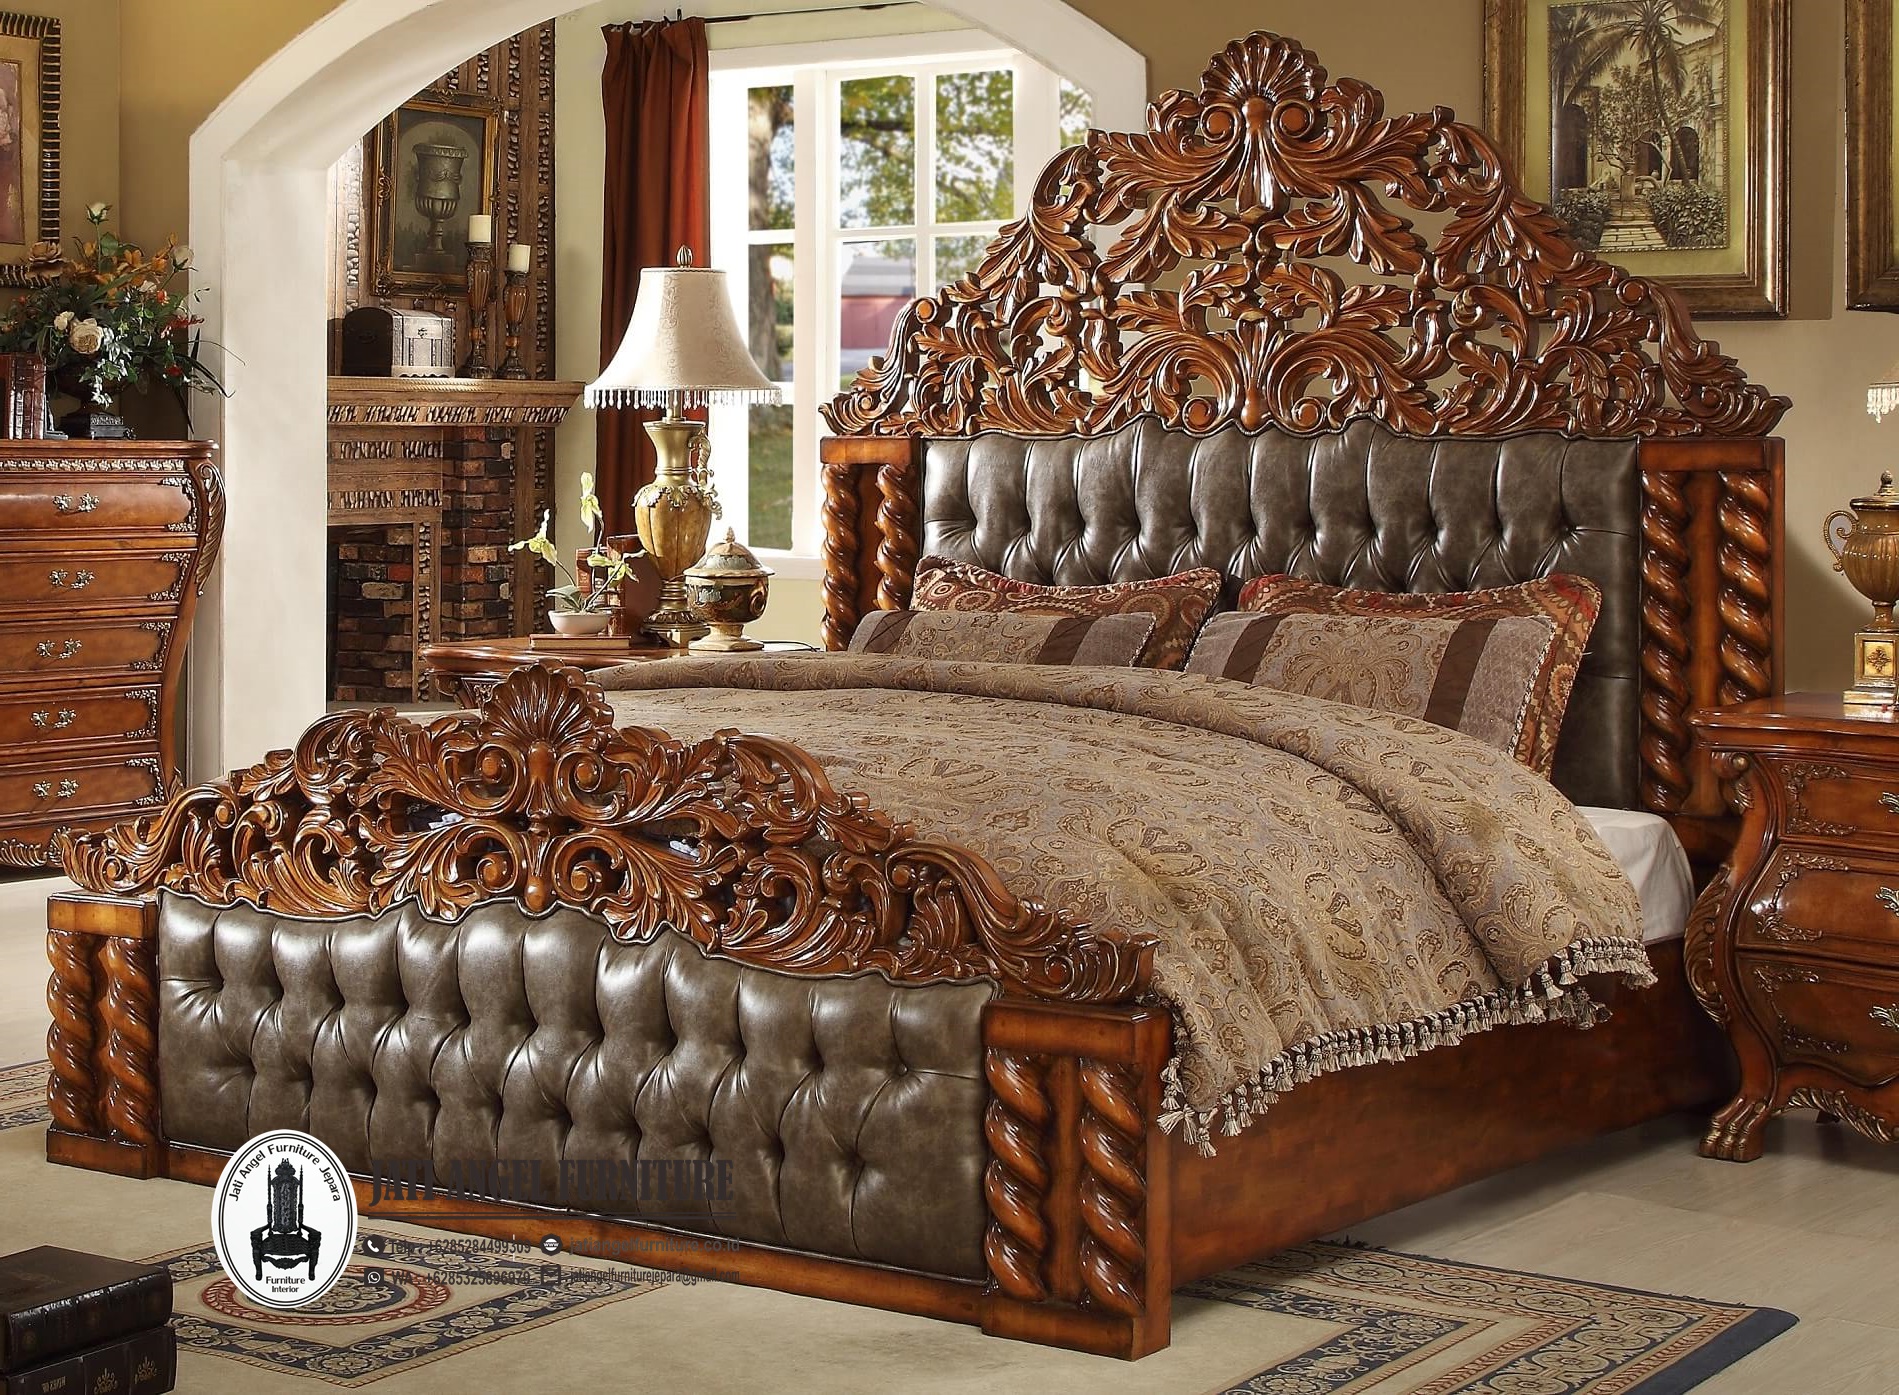 Desain Kamar Tidur Modern Klasik Luxury Terbaru Tempat Tidur Modern Kayu Jati Jati Angel Furniture